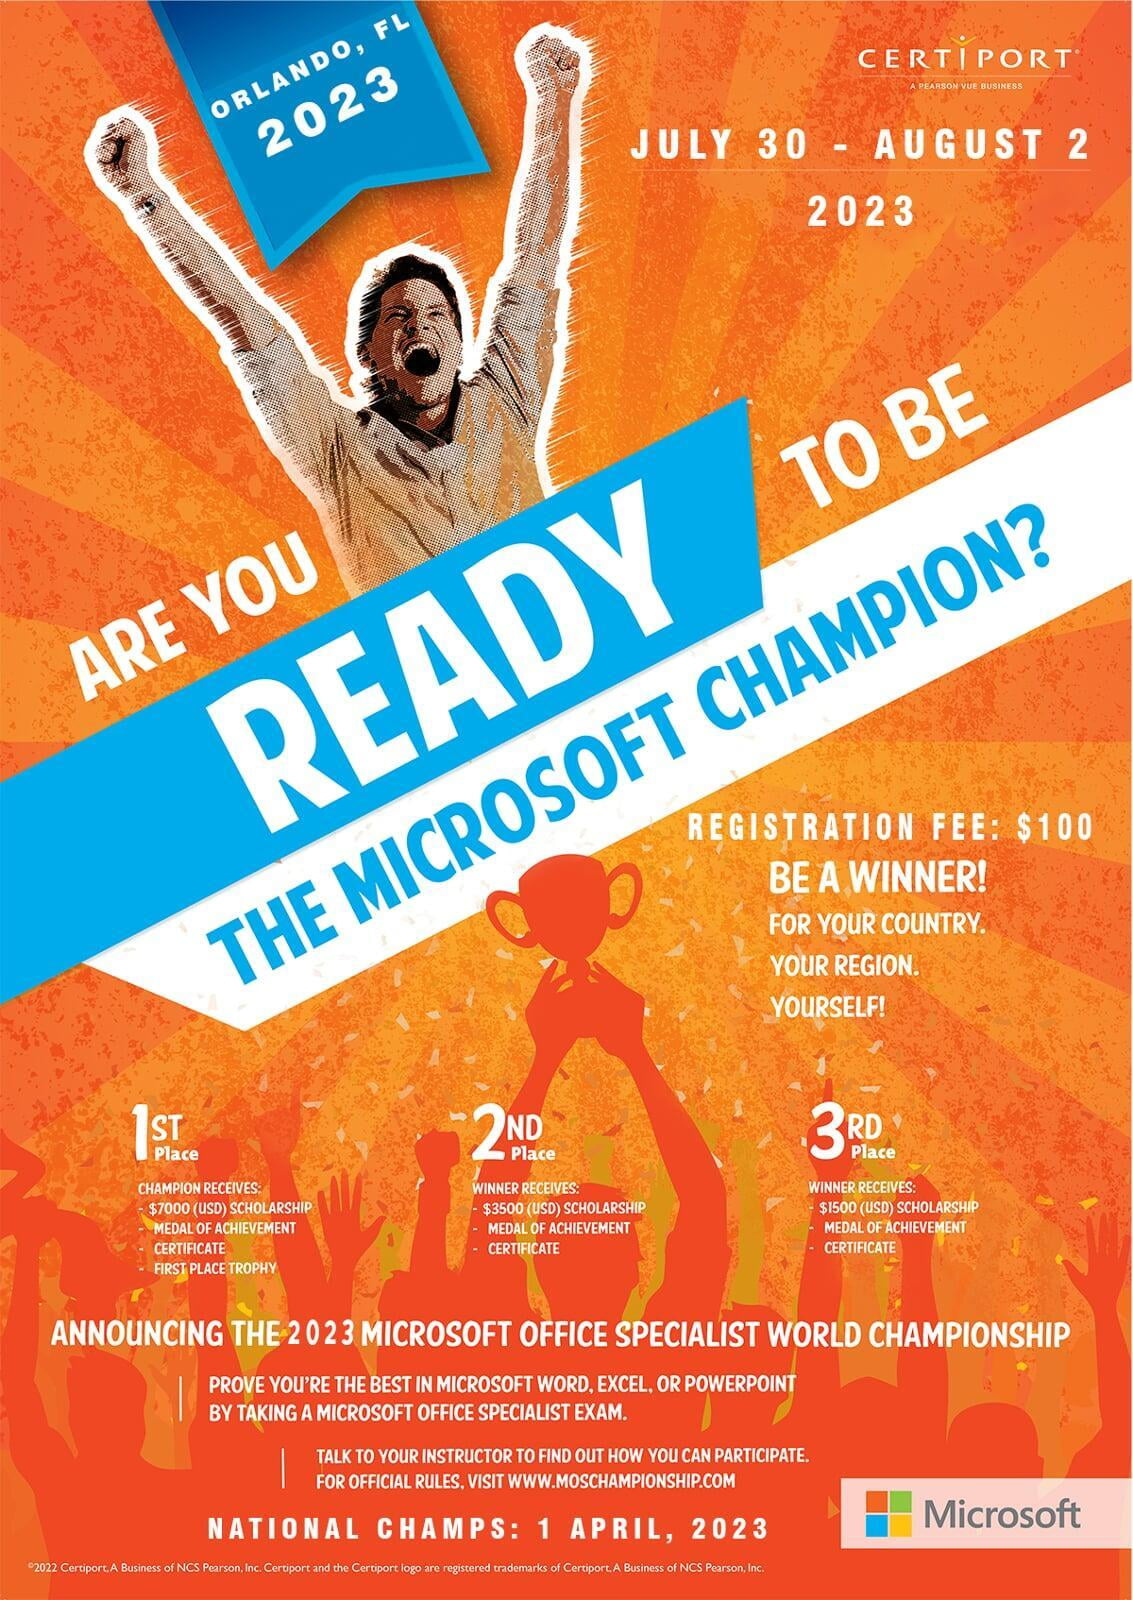 Microsoft Office Specialist World Championship